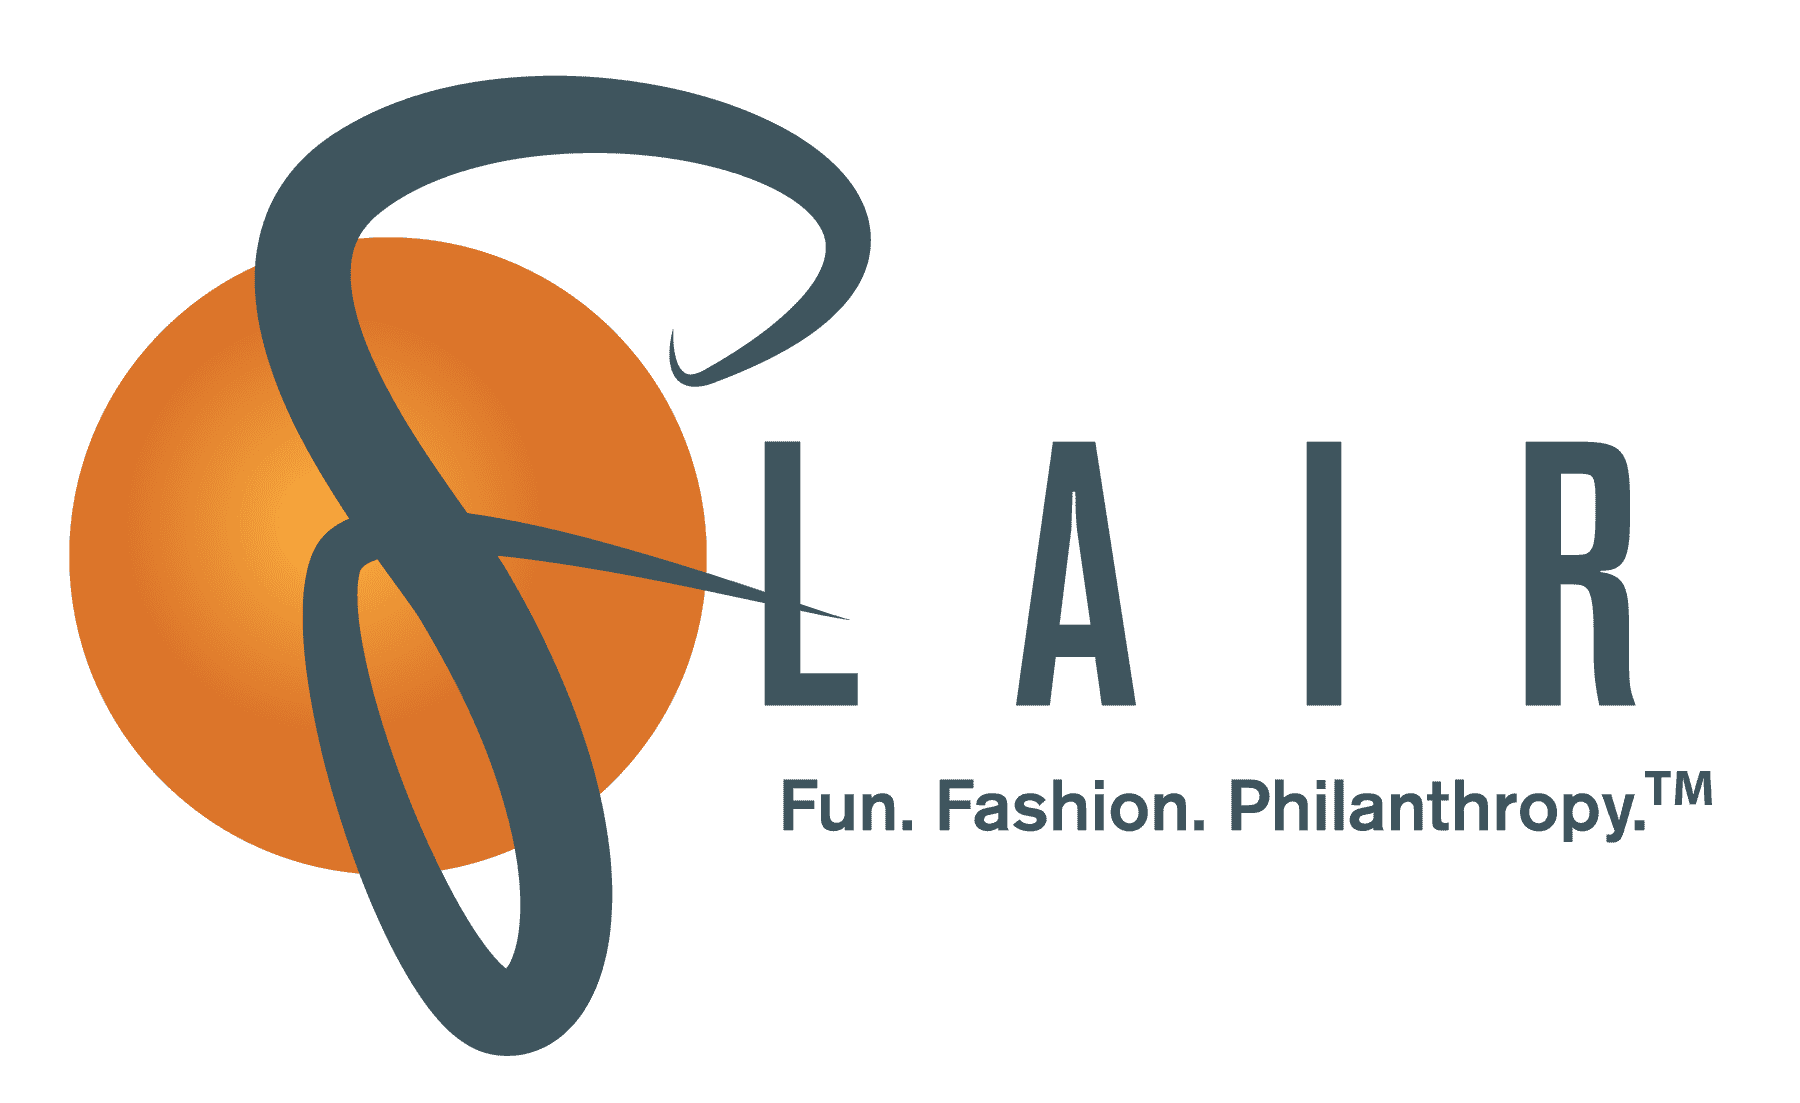 FLAIR logo 2021 fall colors 02